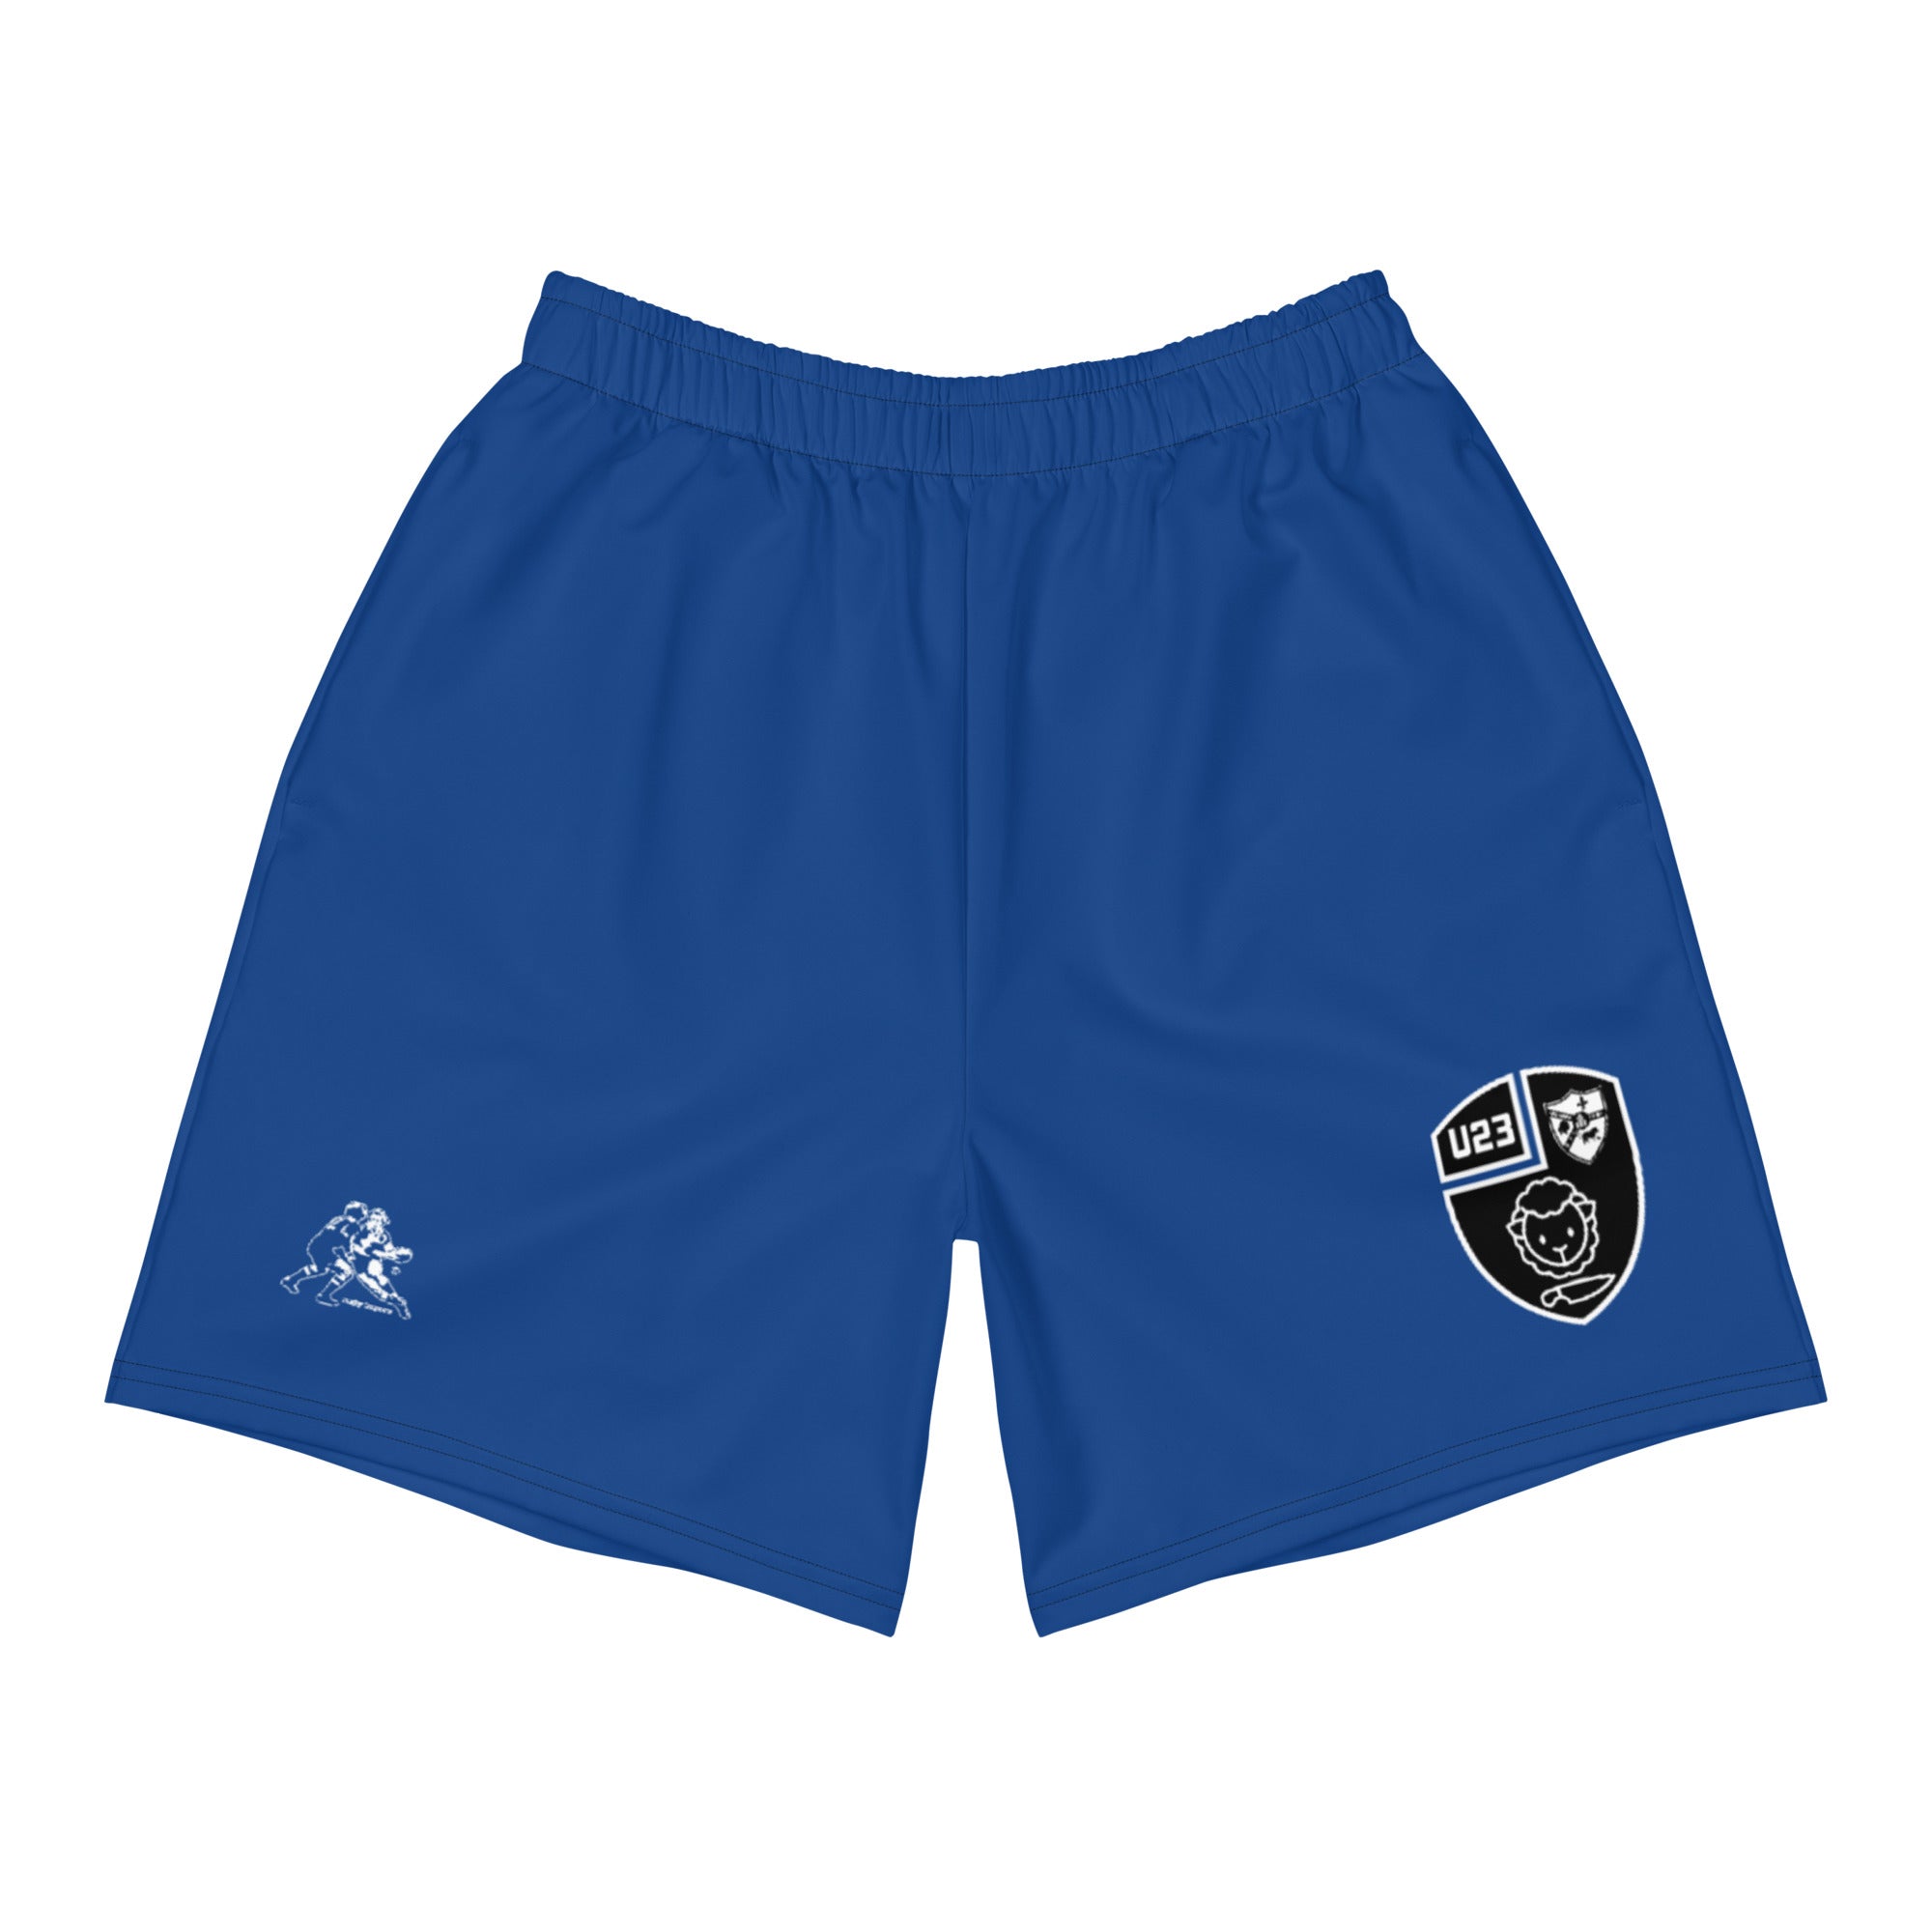 Rugby Imports Black & Blue U23 Athletic Shorts